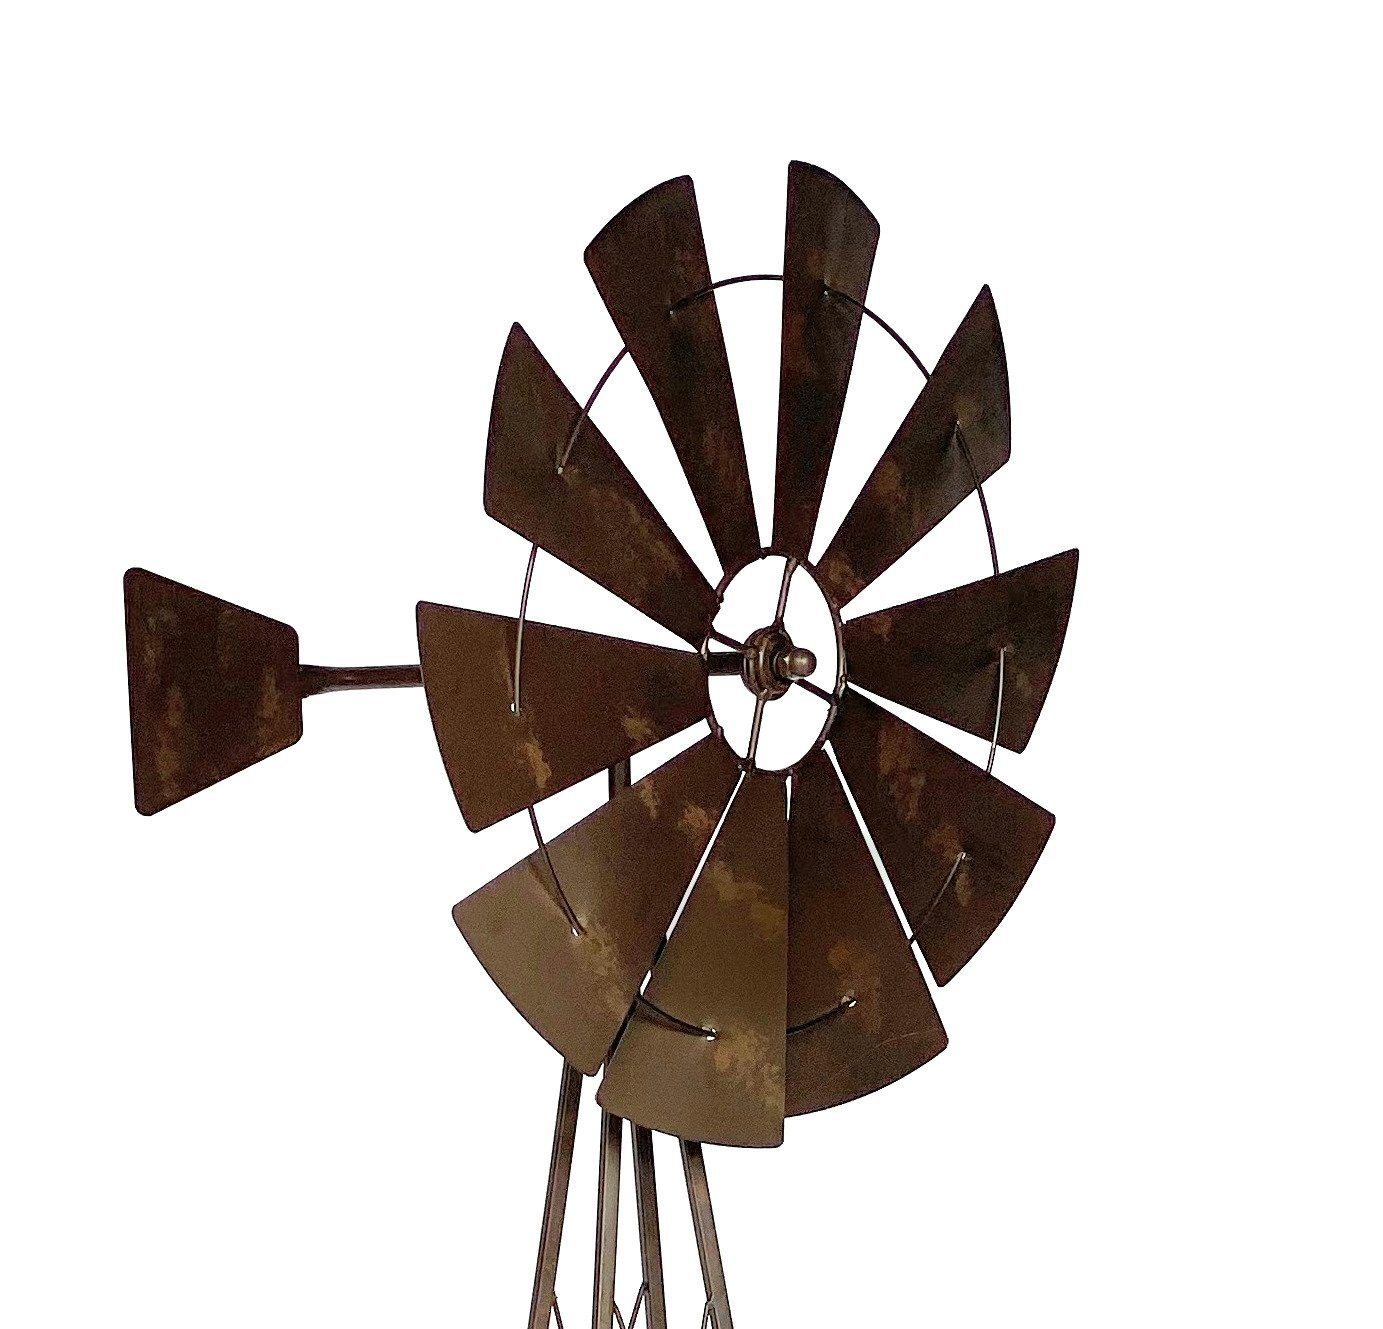 Garten Braun Deko-Windrad Metall DanDiBo Windmühle 170 Bodenstecker Wetterfest Gartendeko Gartenstecker kugelgelagert 96019 Windrad cm Windspiel